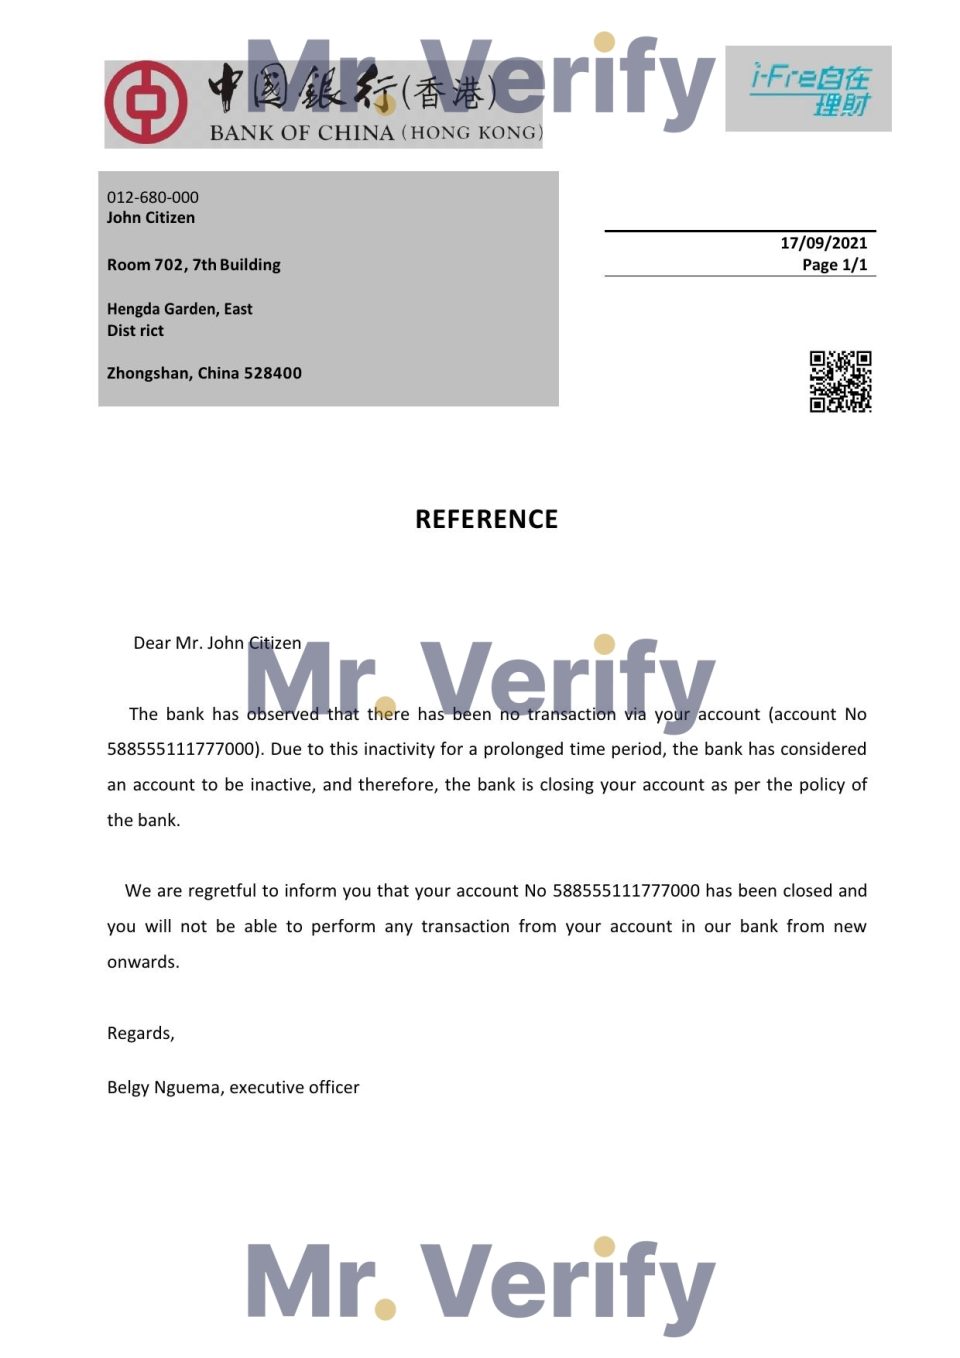 Download Hong Kong Bank of China Bank Reference Letter Templates | Editable Word